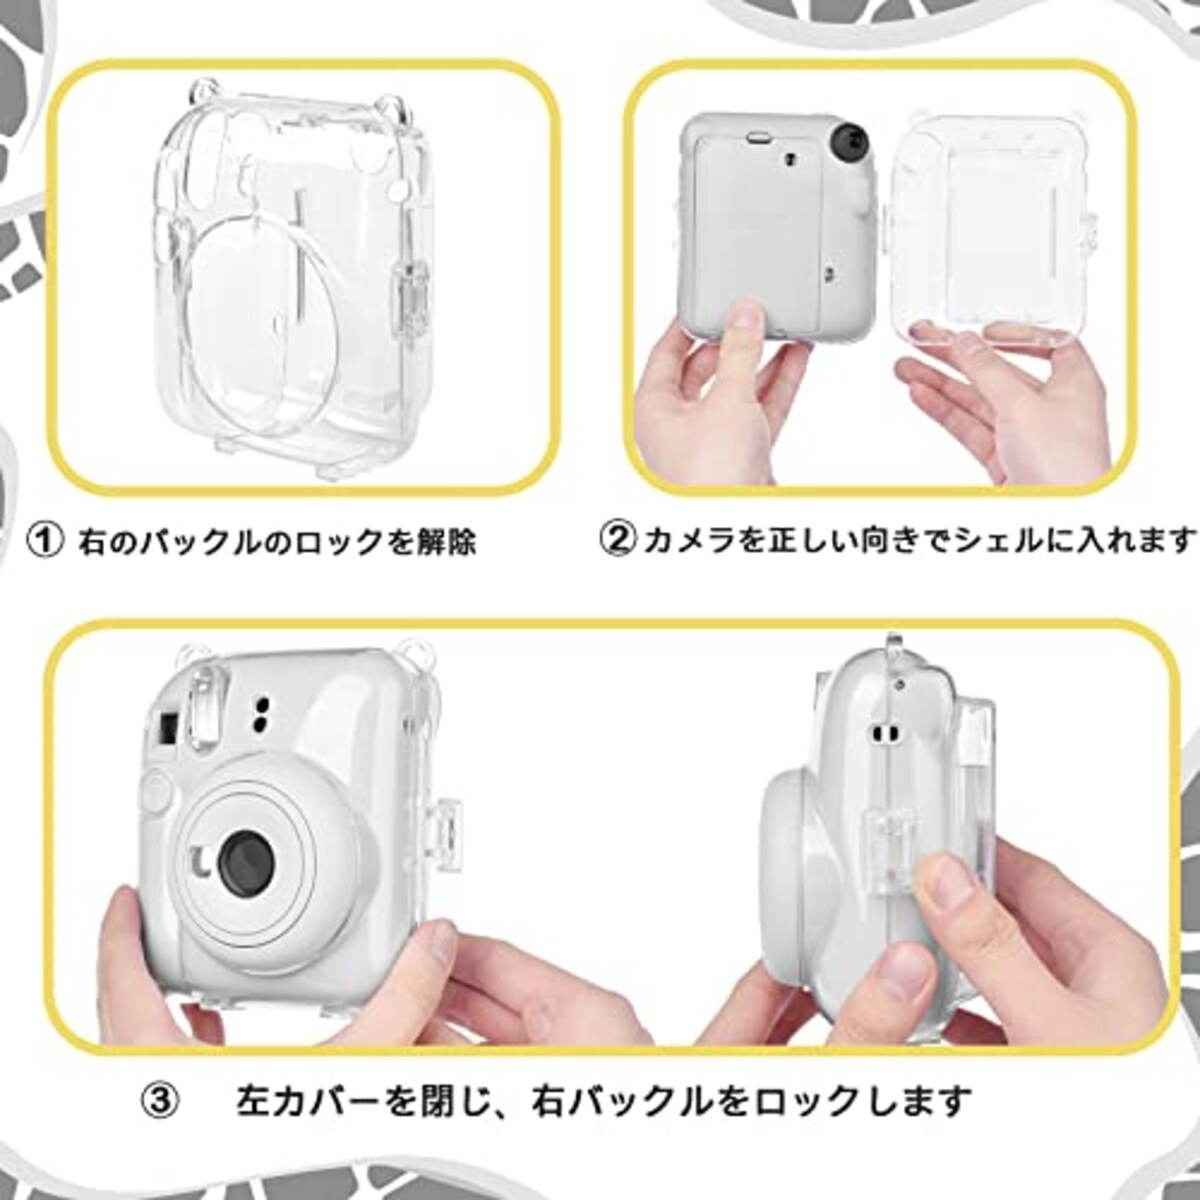  HIYQIN mini12 ケース 富士フイルム Instax Mini 12 カメラ用保護クリアケース クリスタルハードシェルカバー ショルダーストラップ付き カメラステッカー画像4 